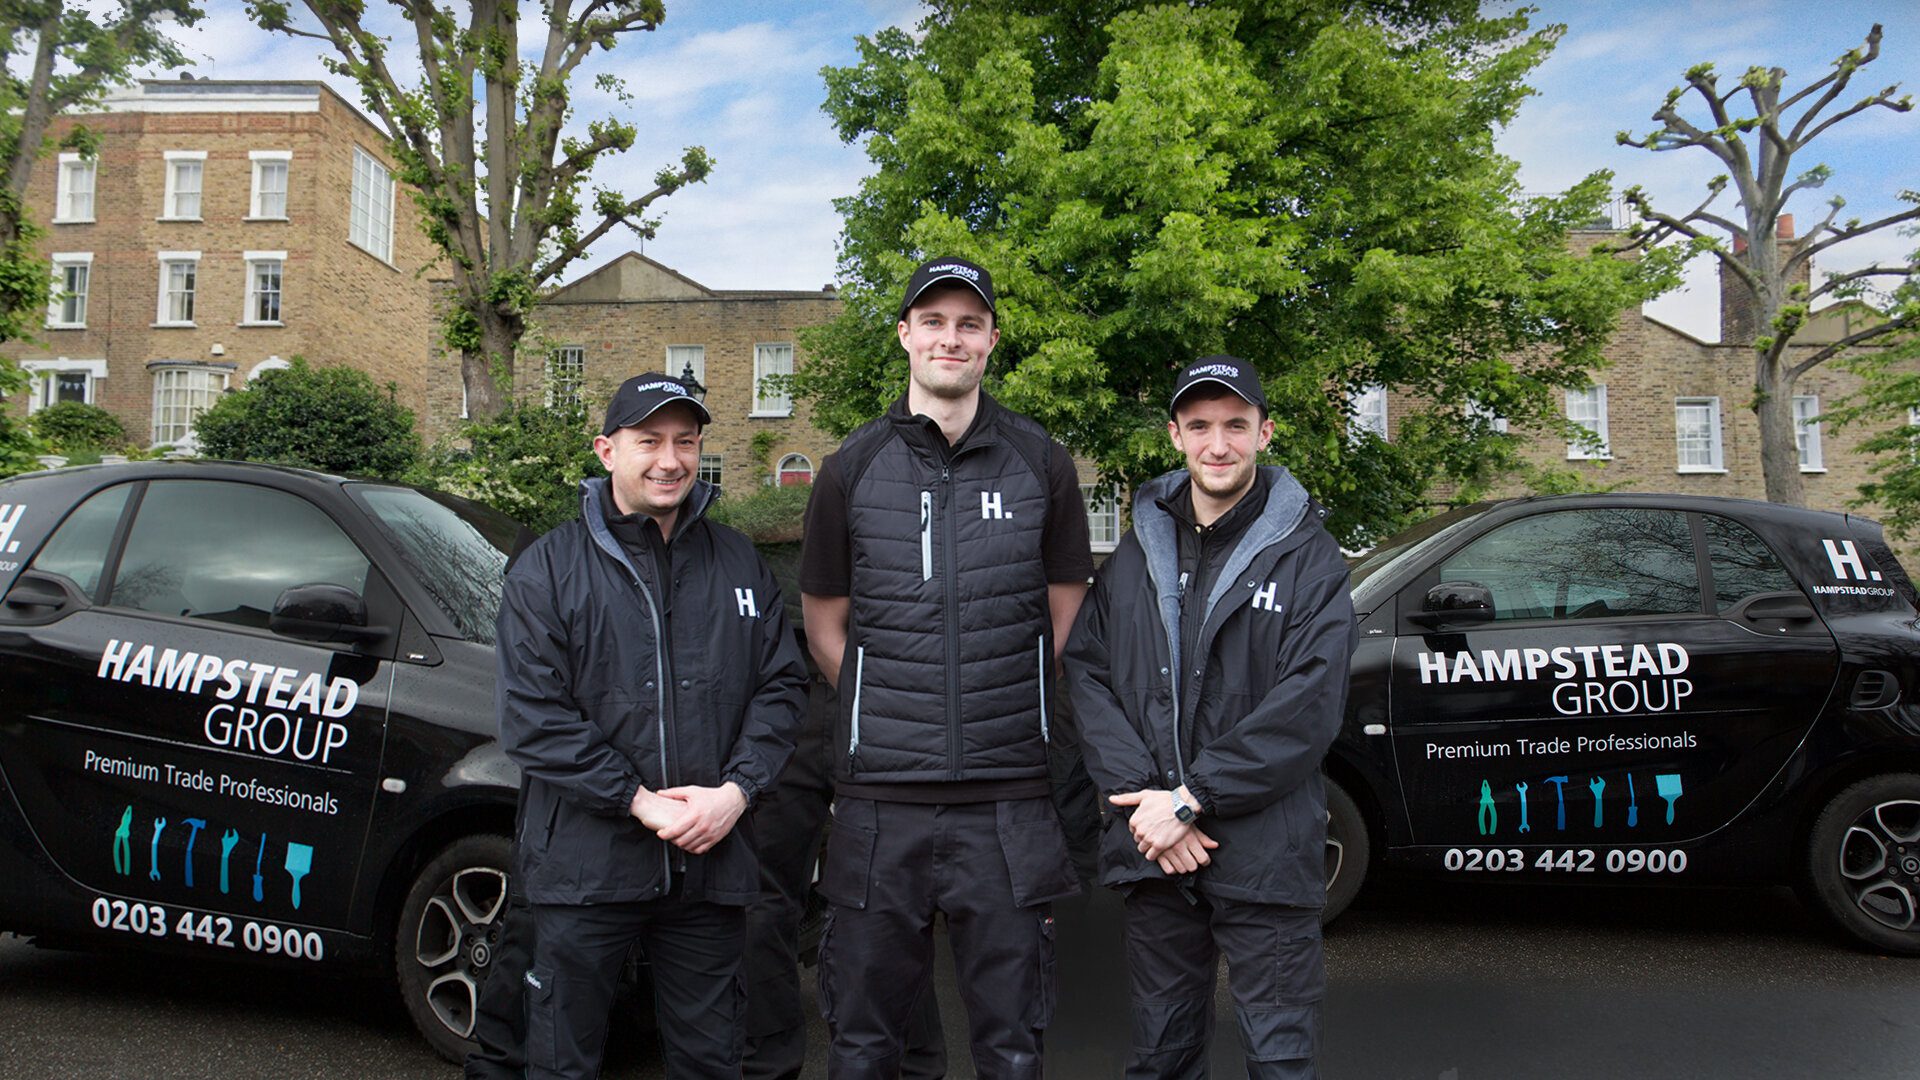 Alexanders Director Launches New London Handyman Service